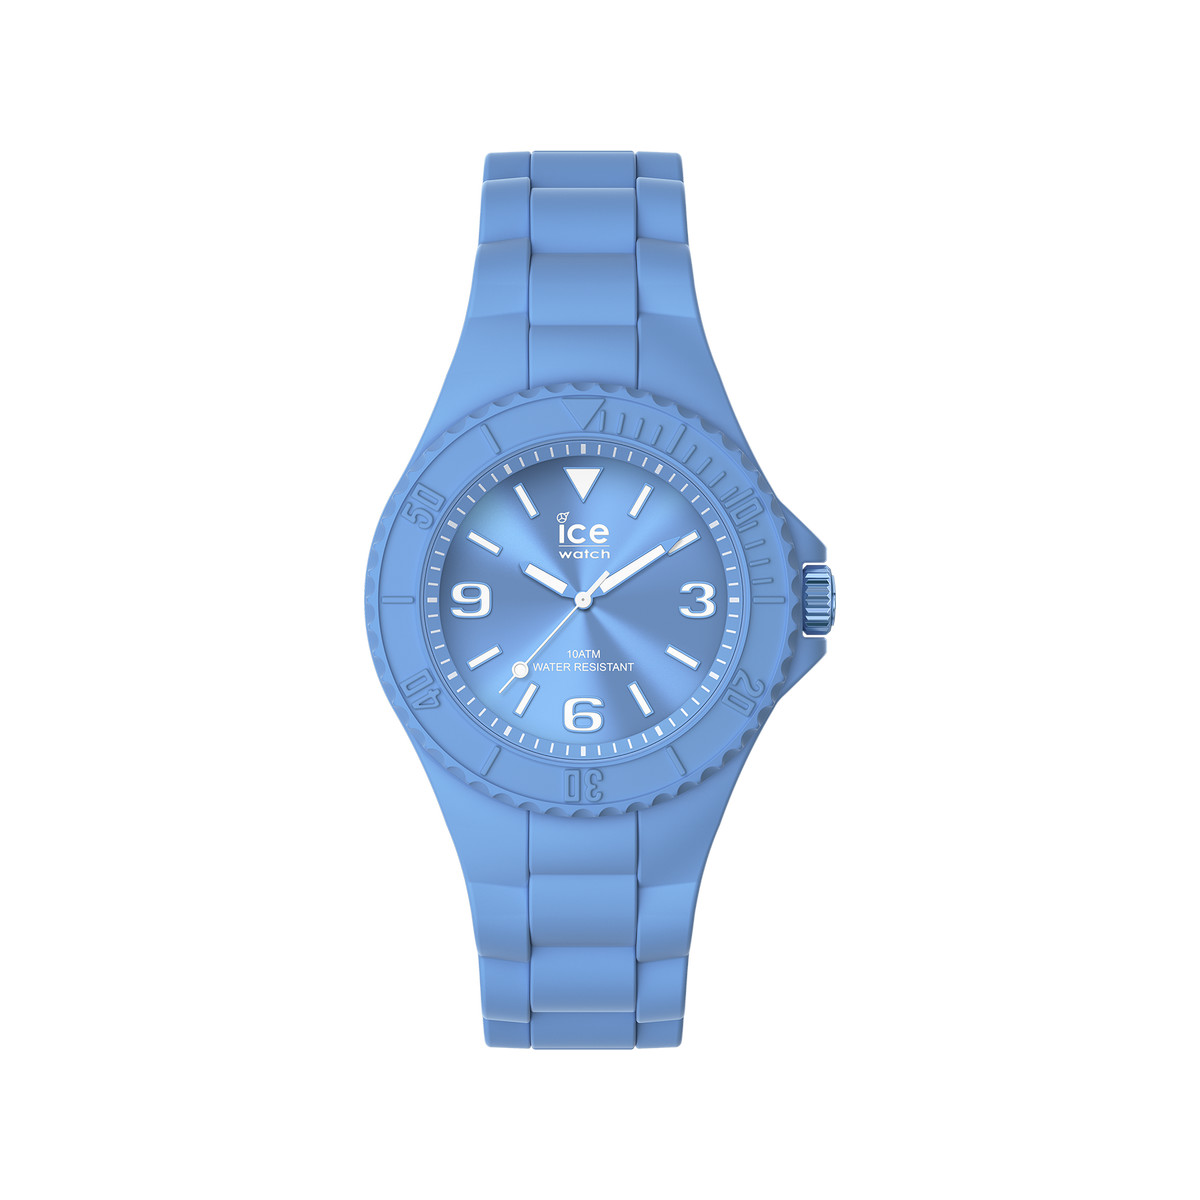 Montre Ice Watch small femme plastique silicone bleu